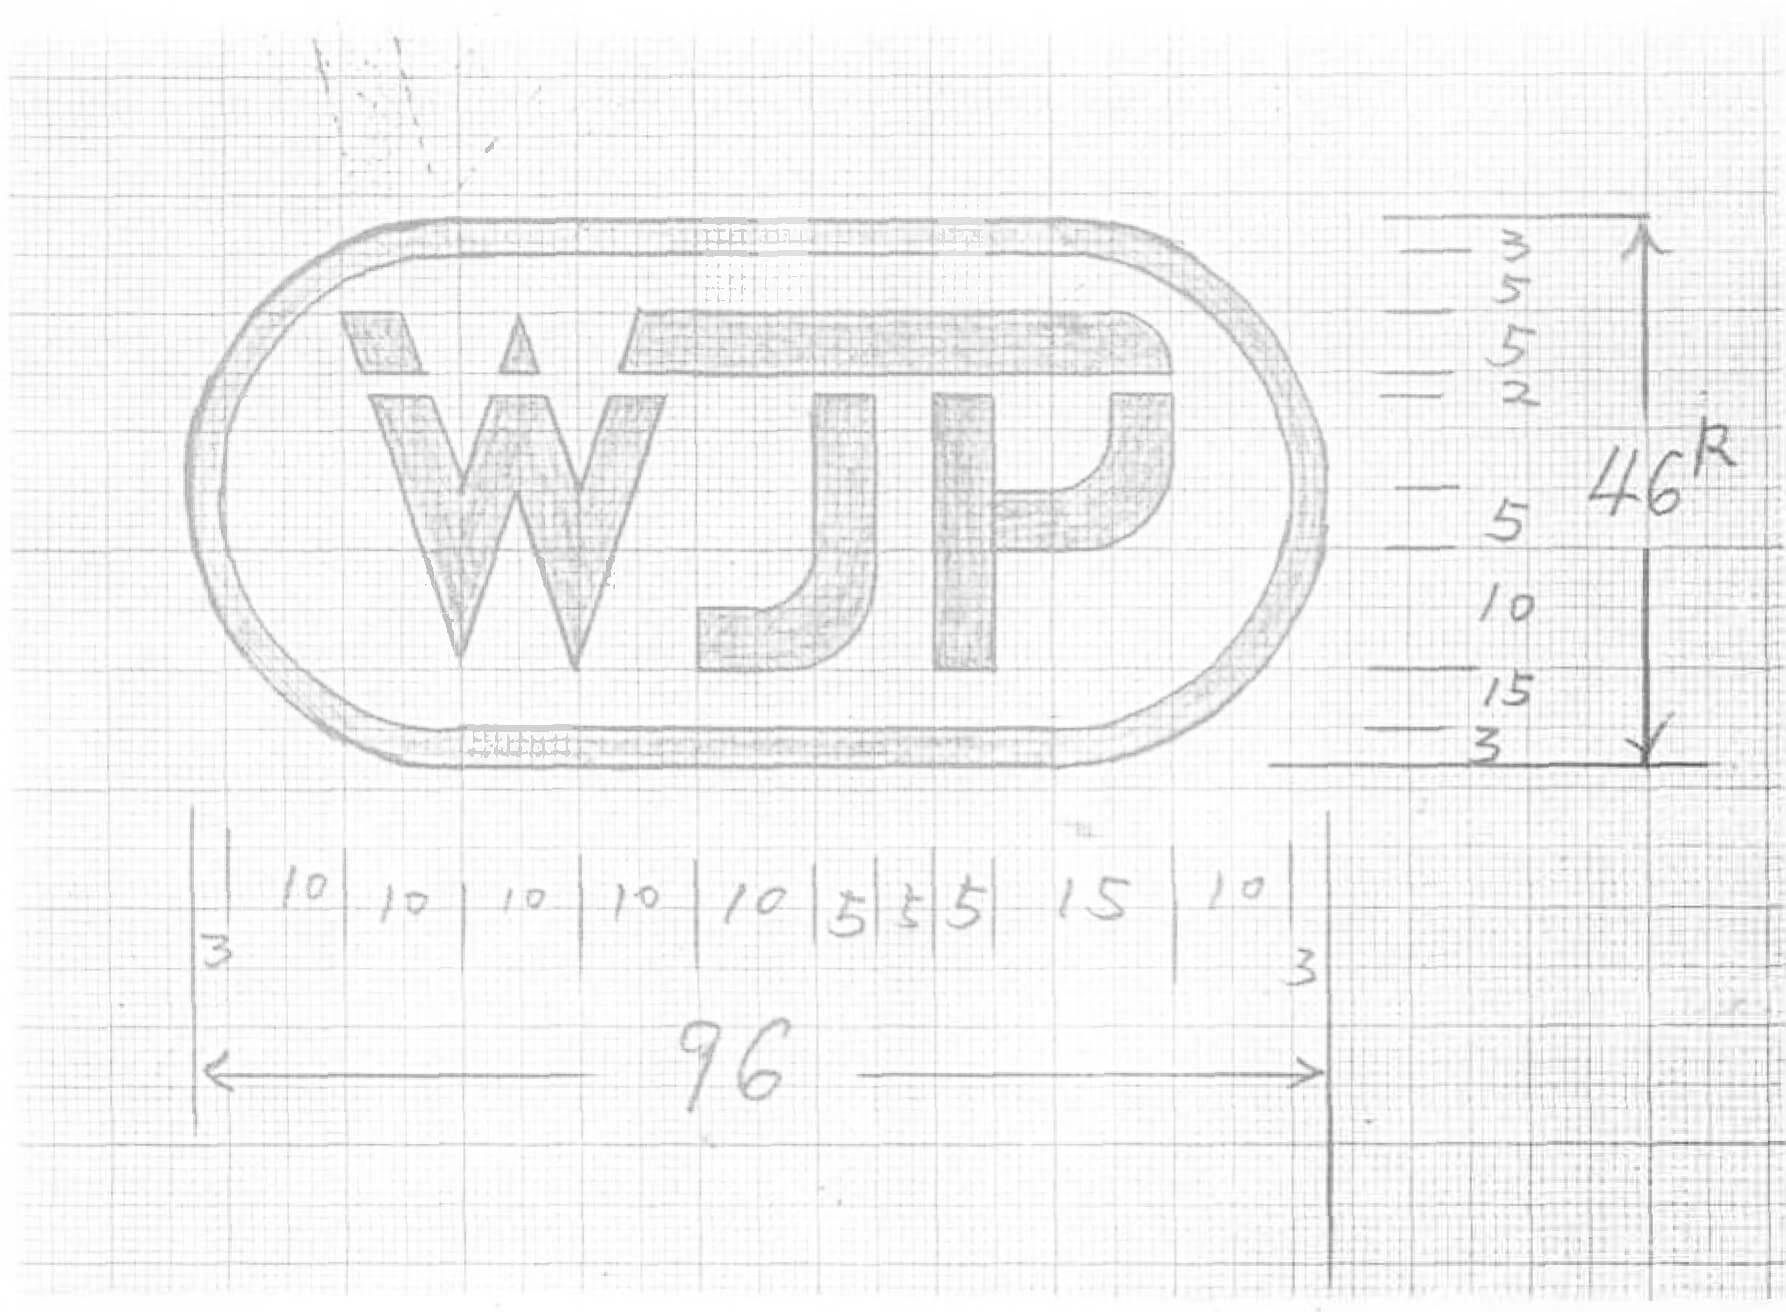 WJP logo sketch